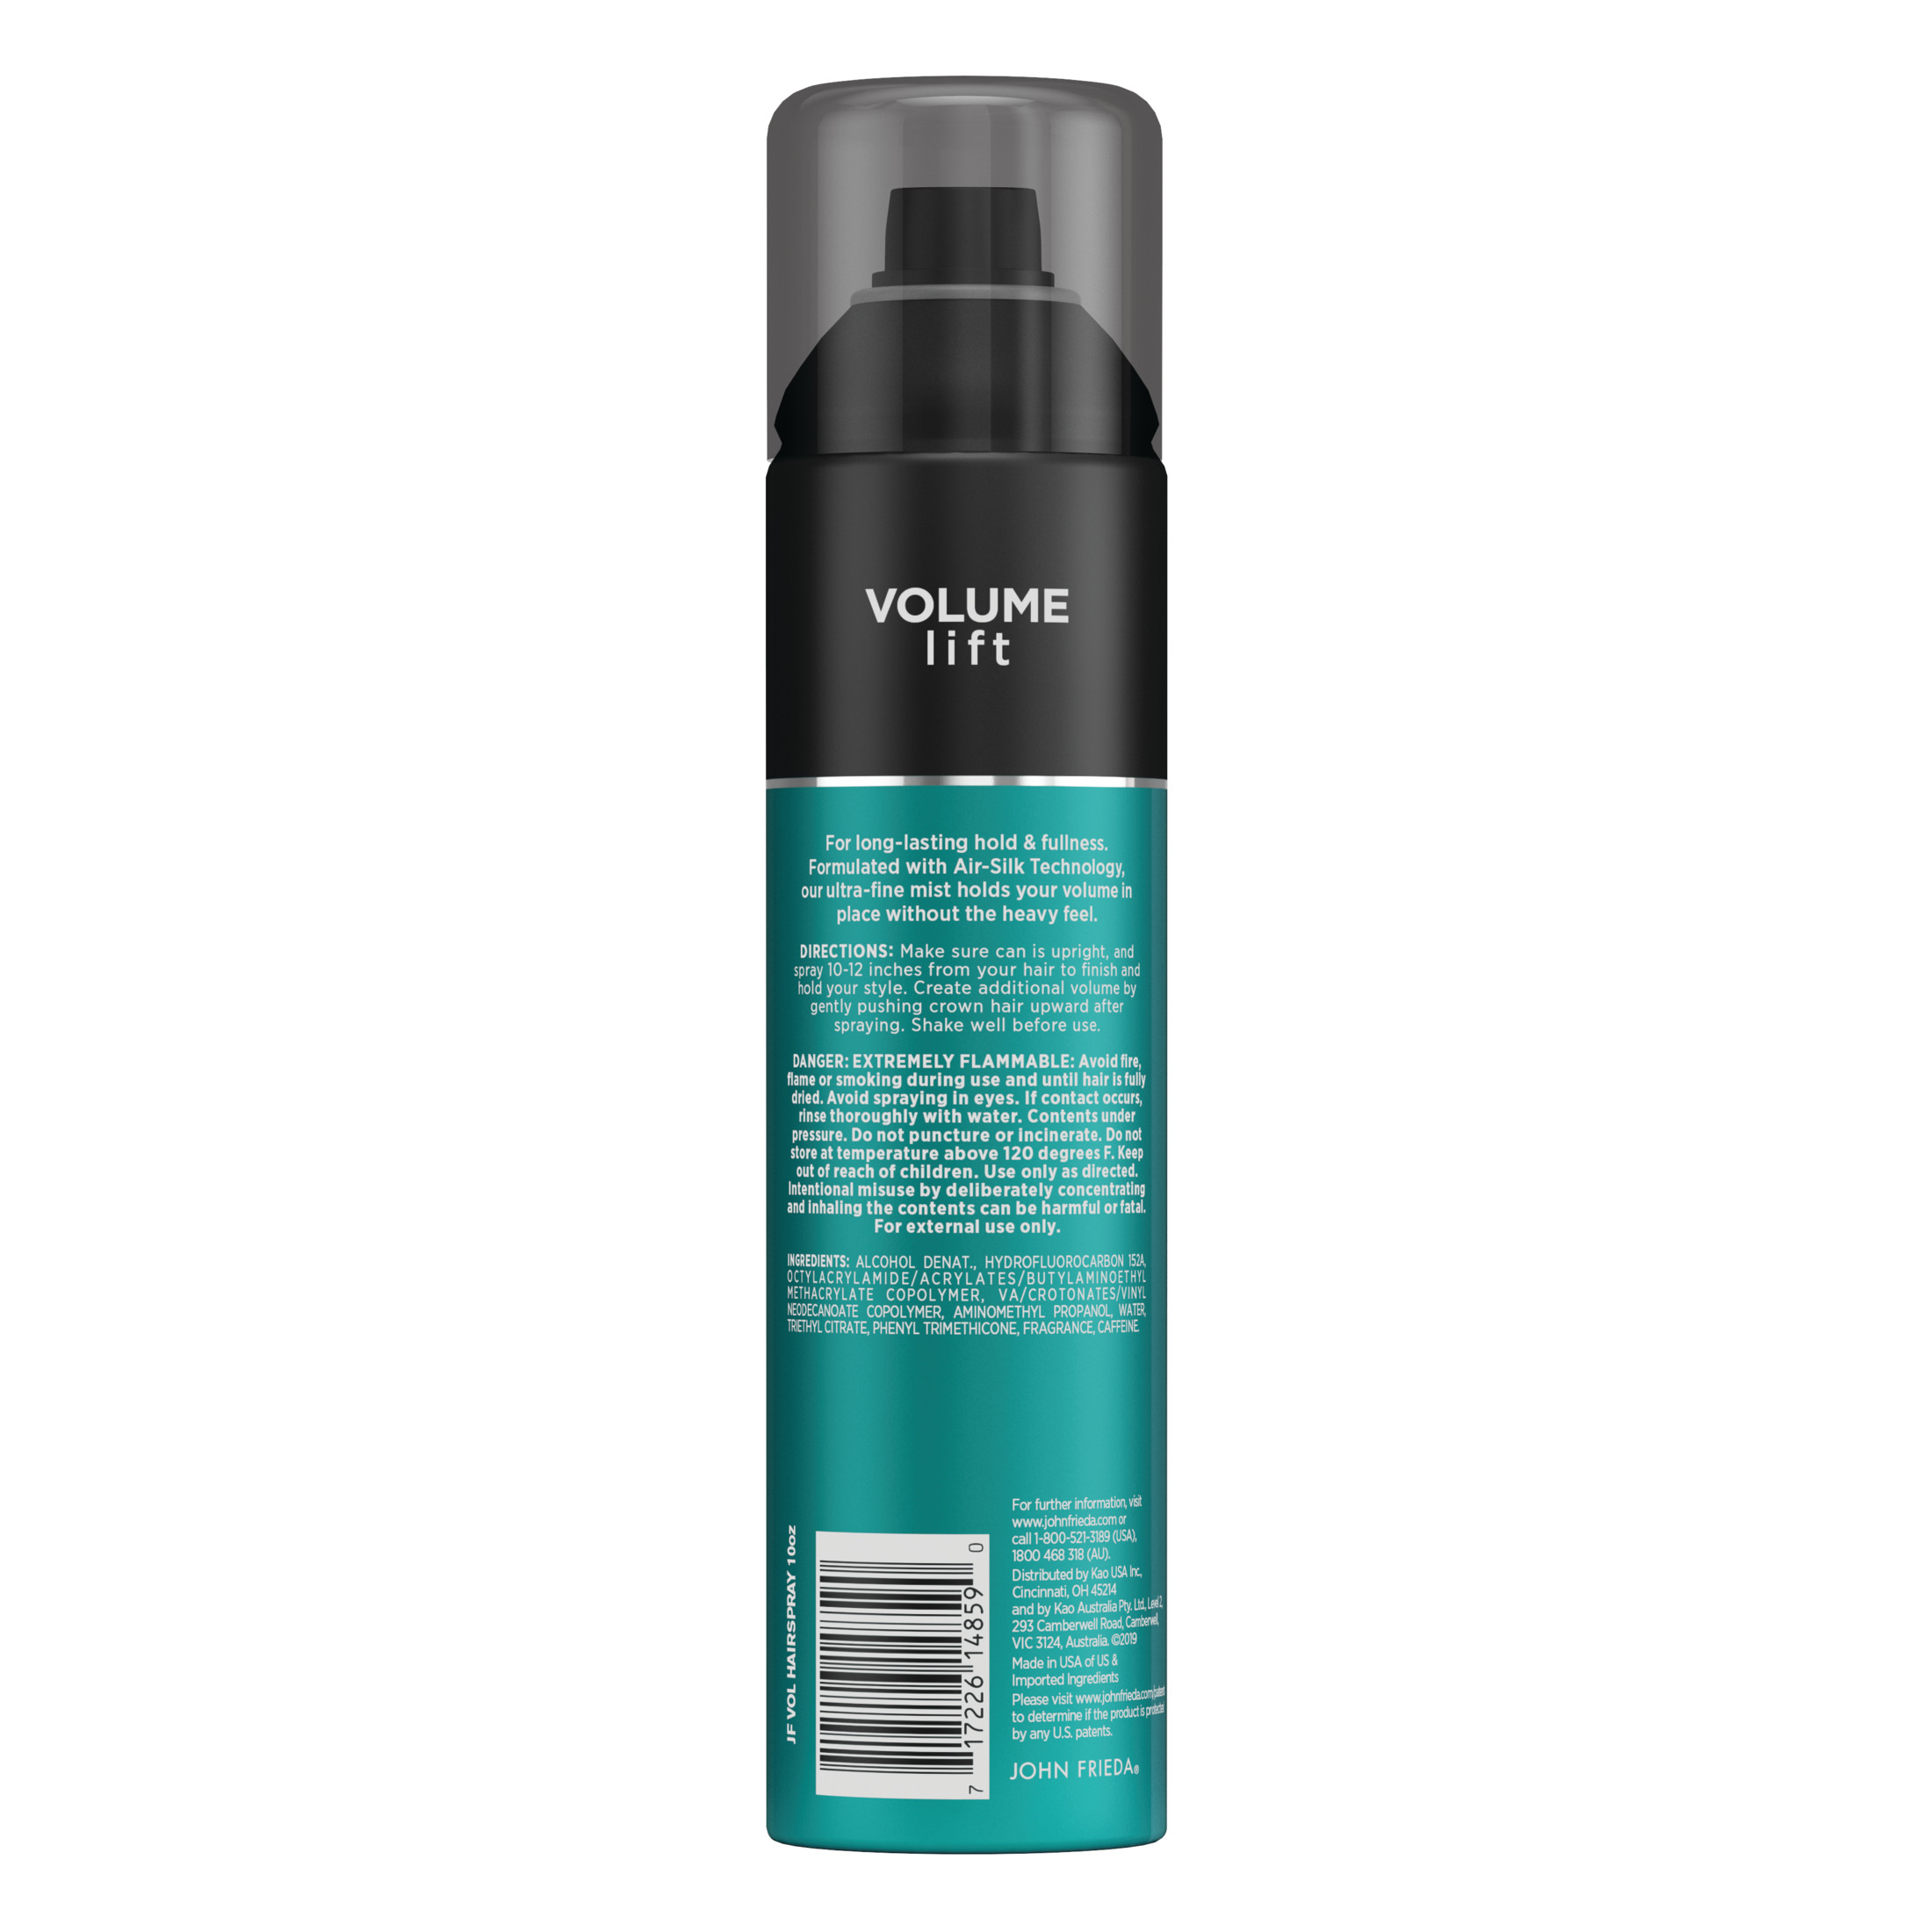 John Frieda Volume Lift Volumizing Hairspray for Fine or Flat Hair, 10 fl oz - image 4 of 4